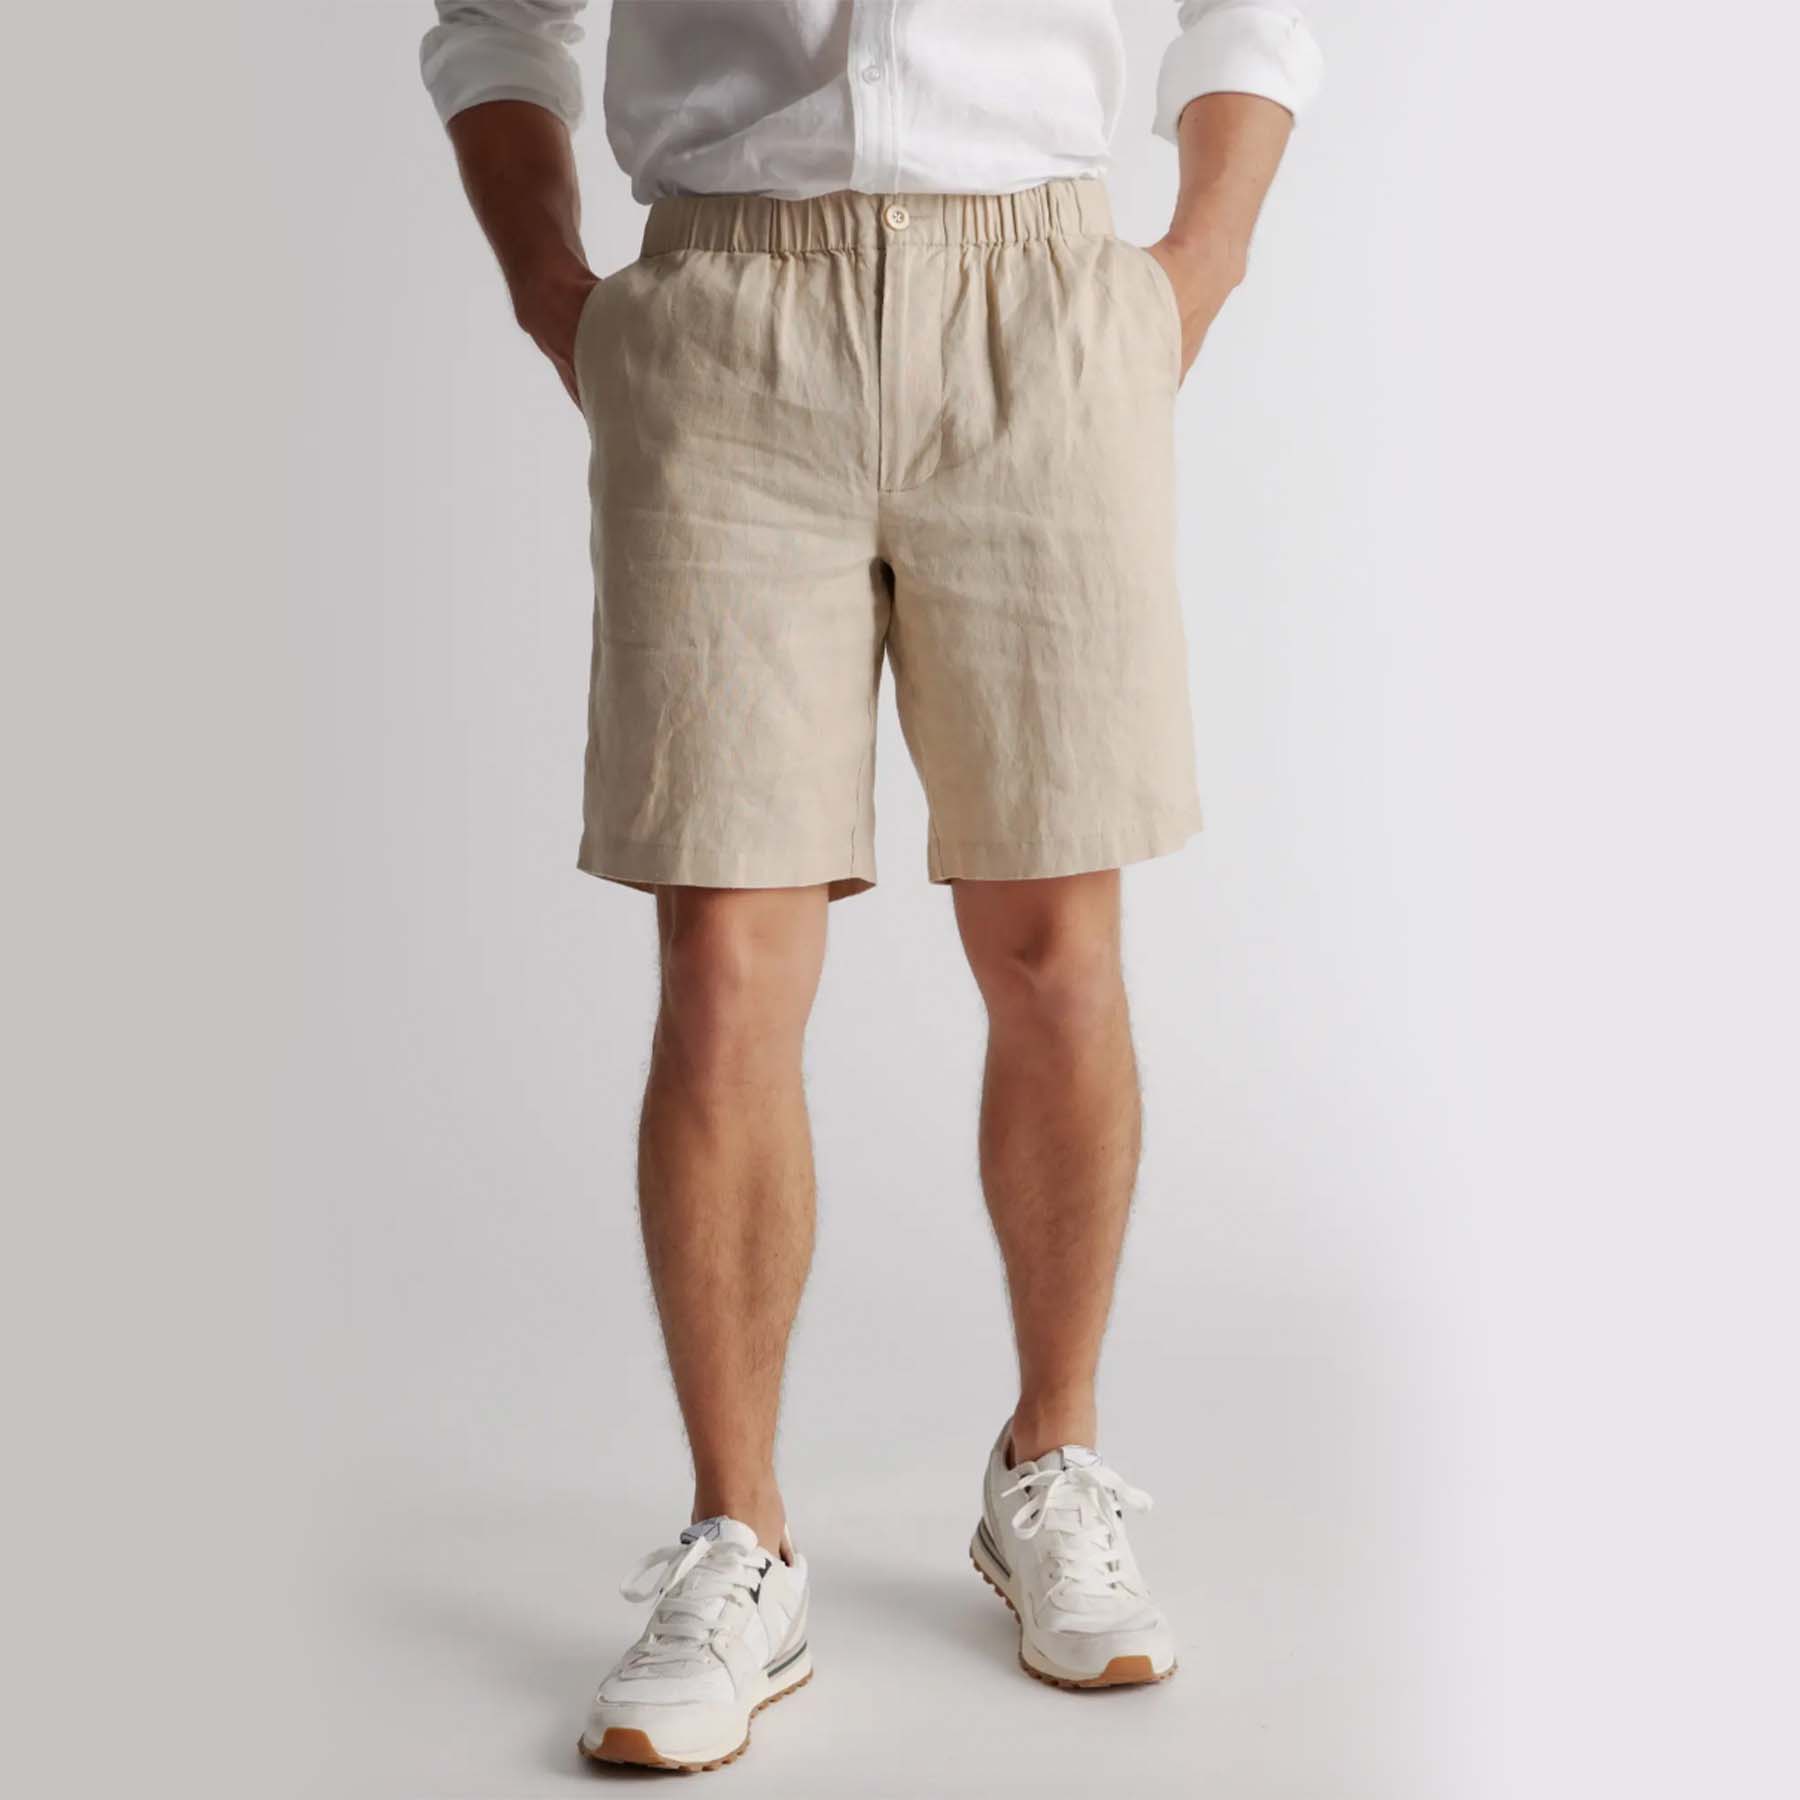 Best Shorts for Men